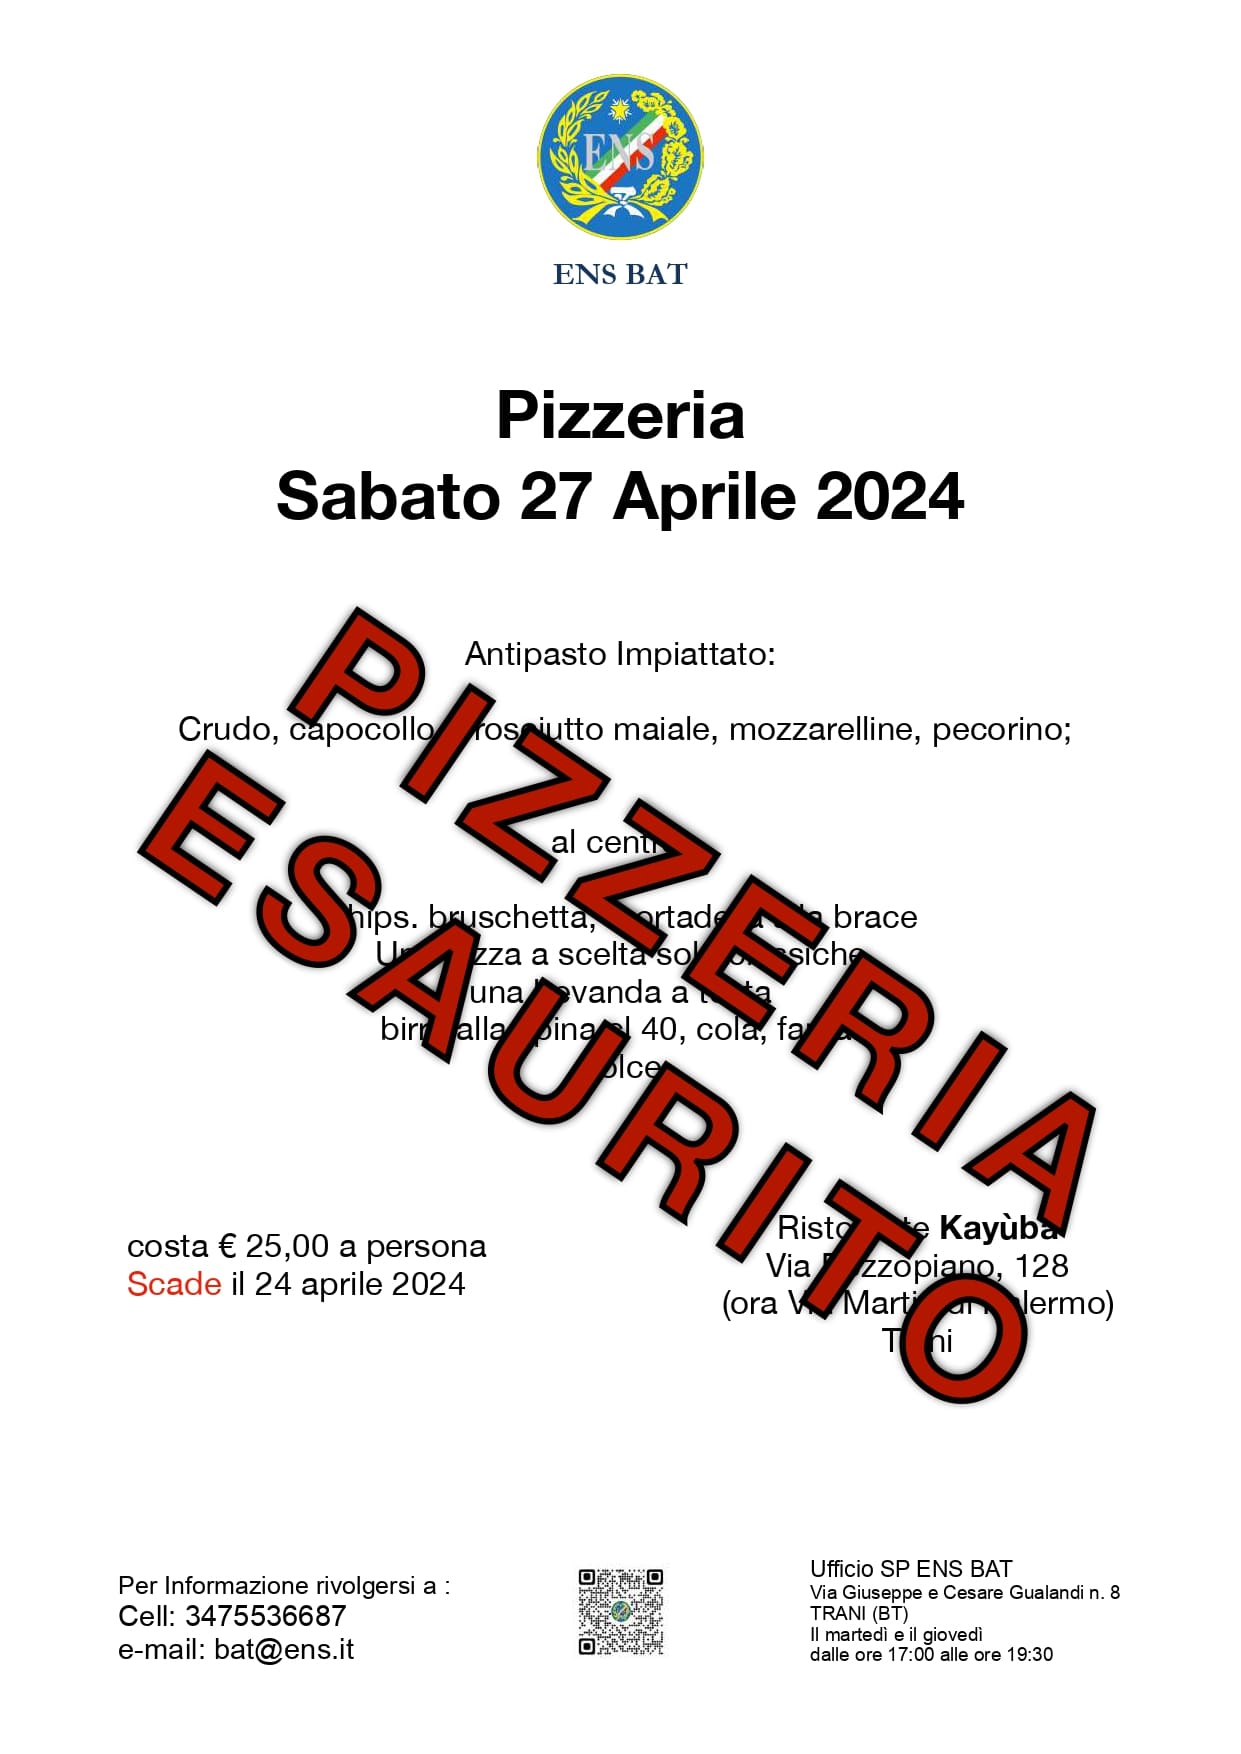 Esaurito Pizzeria 27 Aprile 2024 ENS BAT